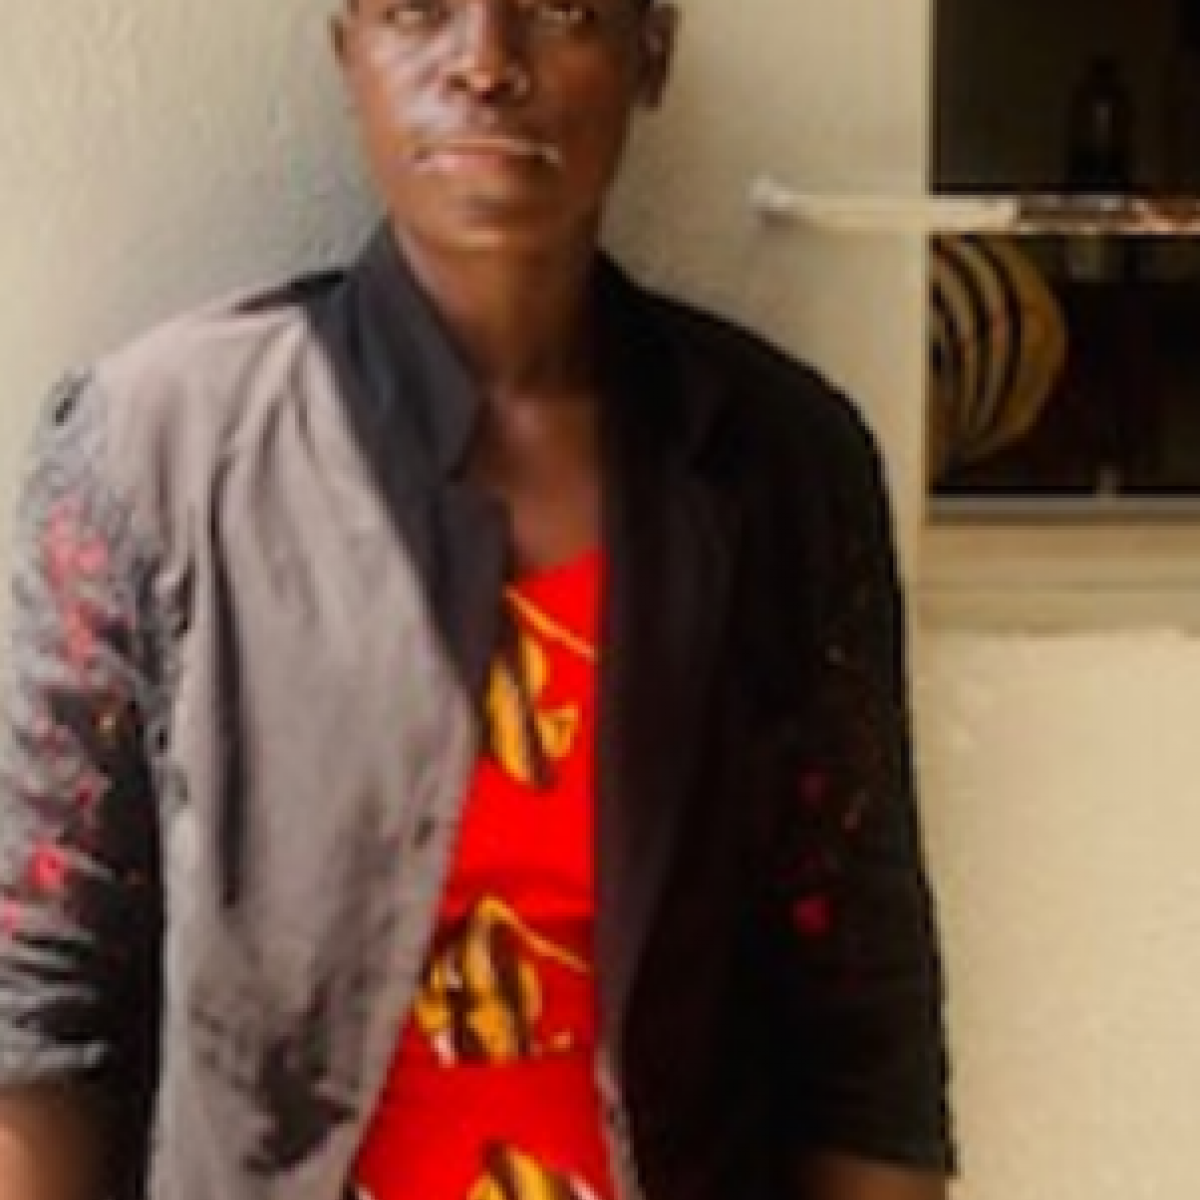 Winfrida Uvambe, a 33 year old beneficiary from Iringa